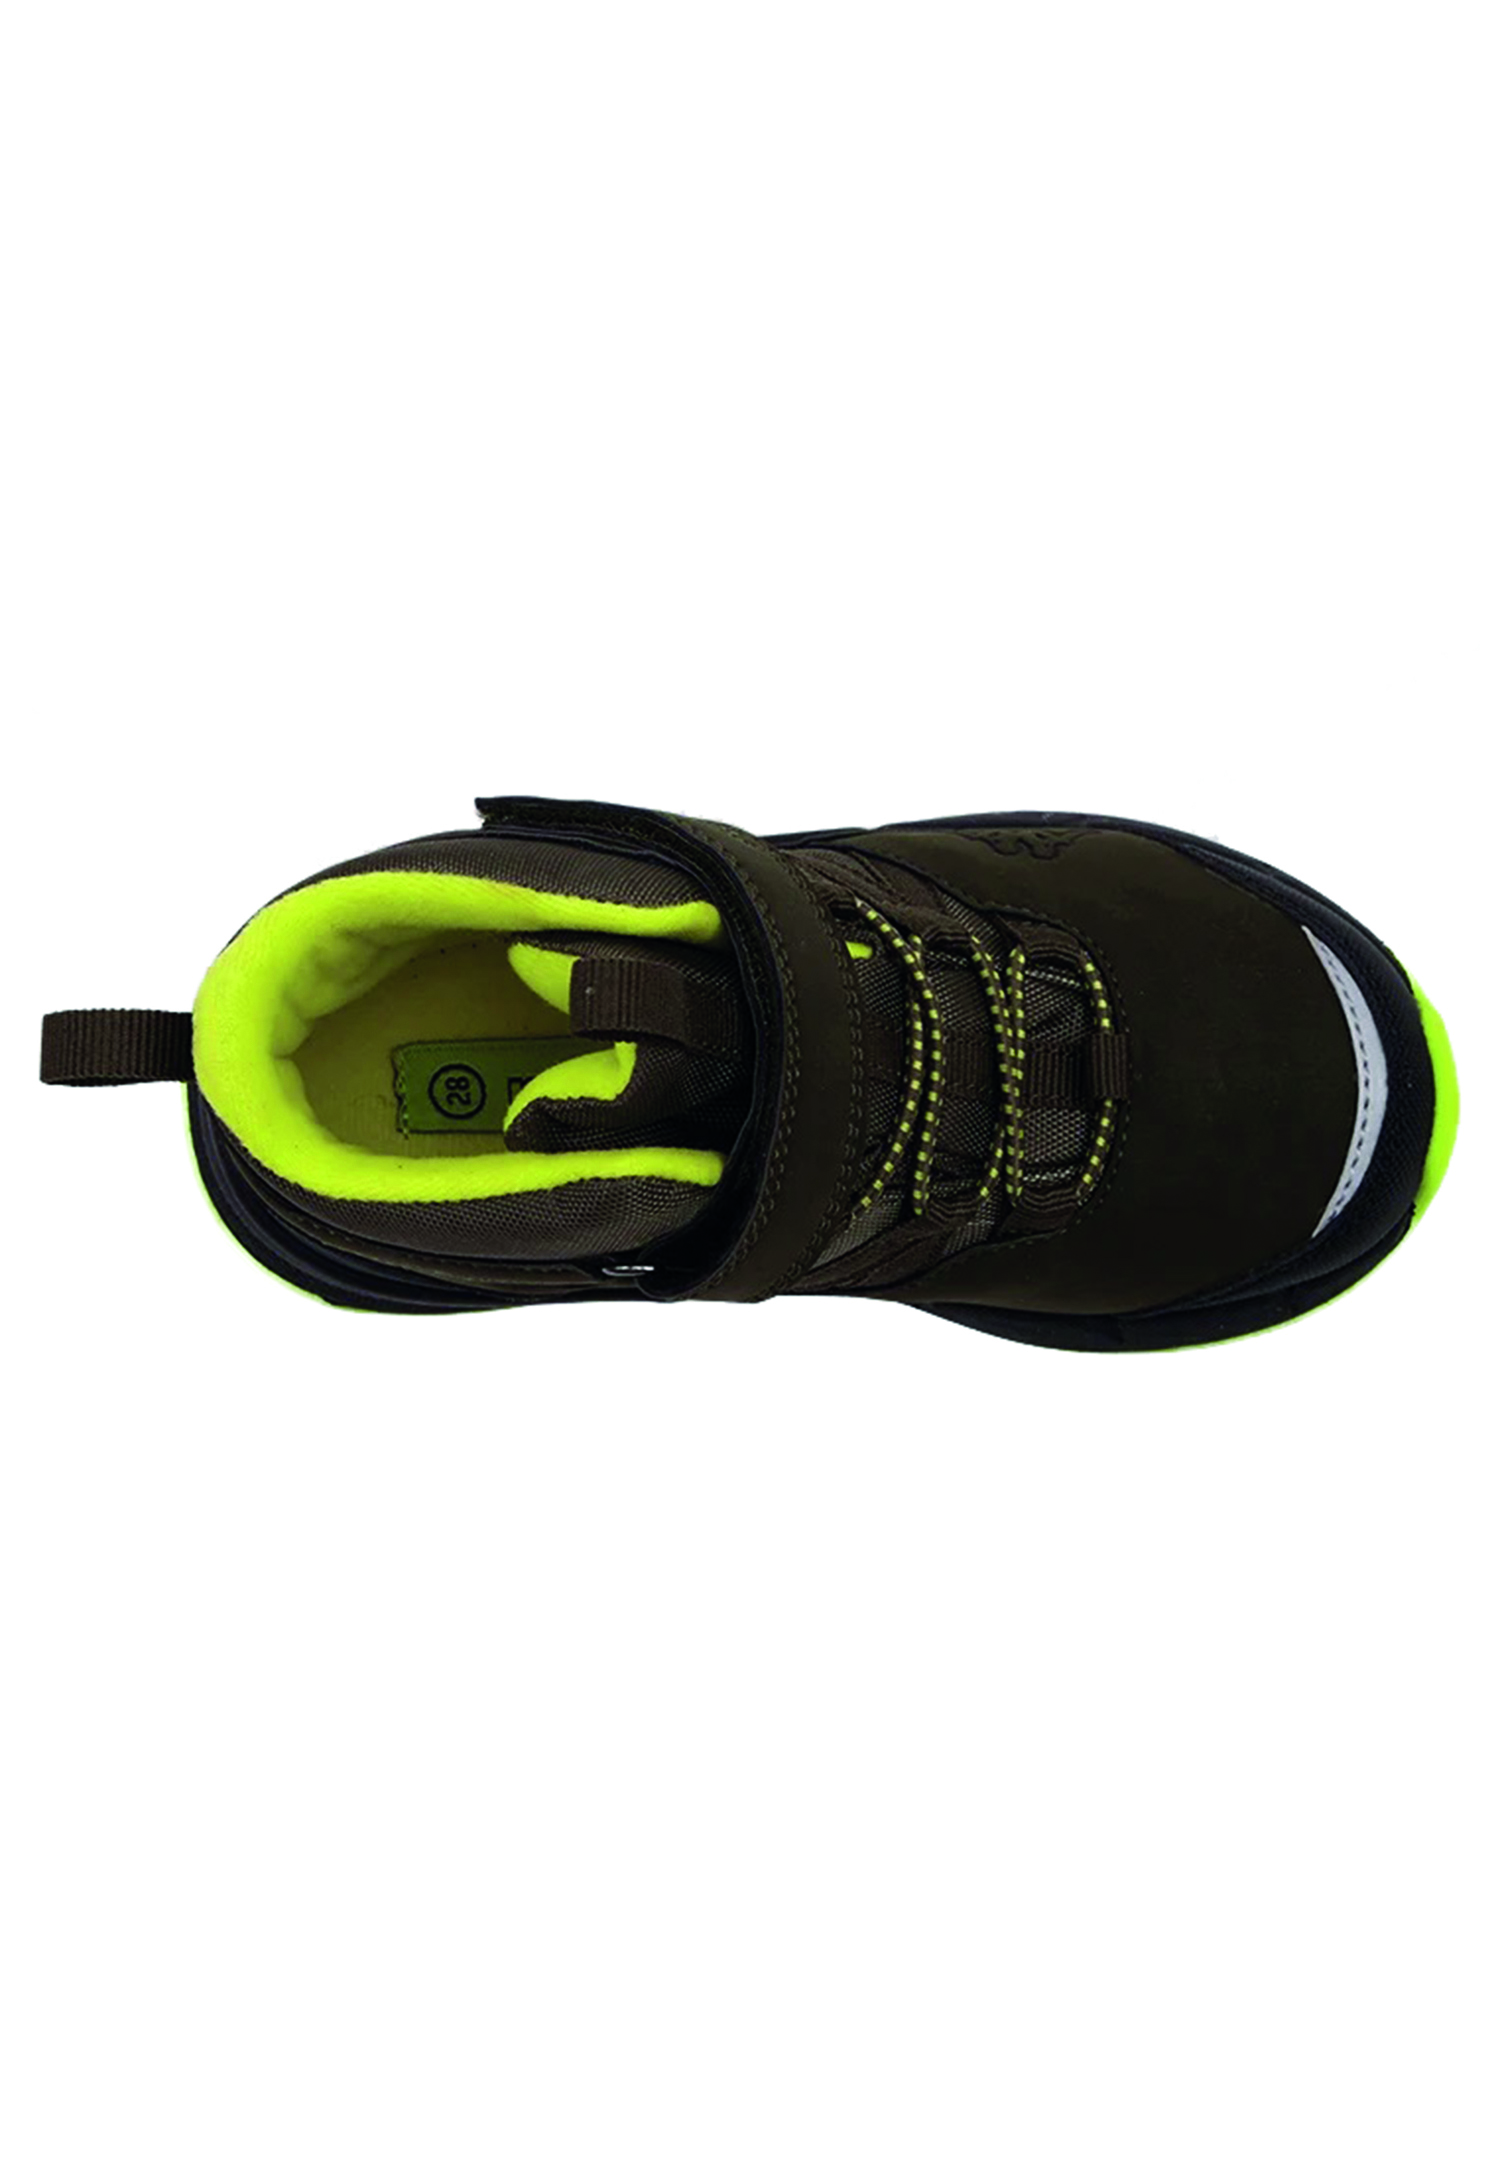 Kappa Unisex Kinder Stiefel Sneaker Stylecode 260897K 3133 grün